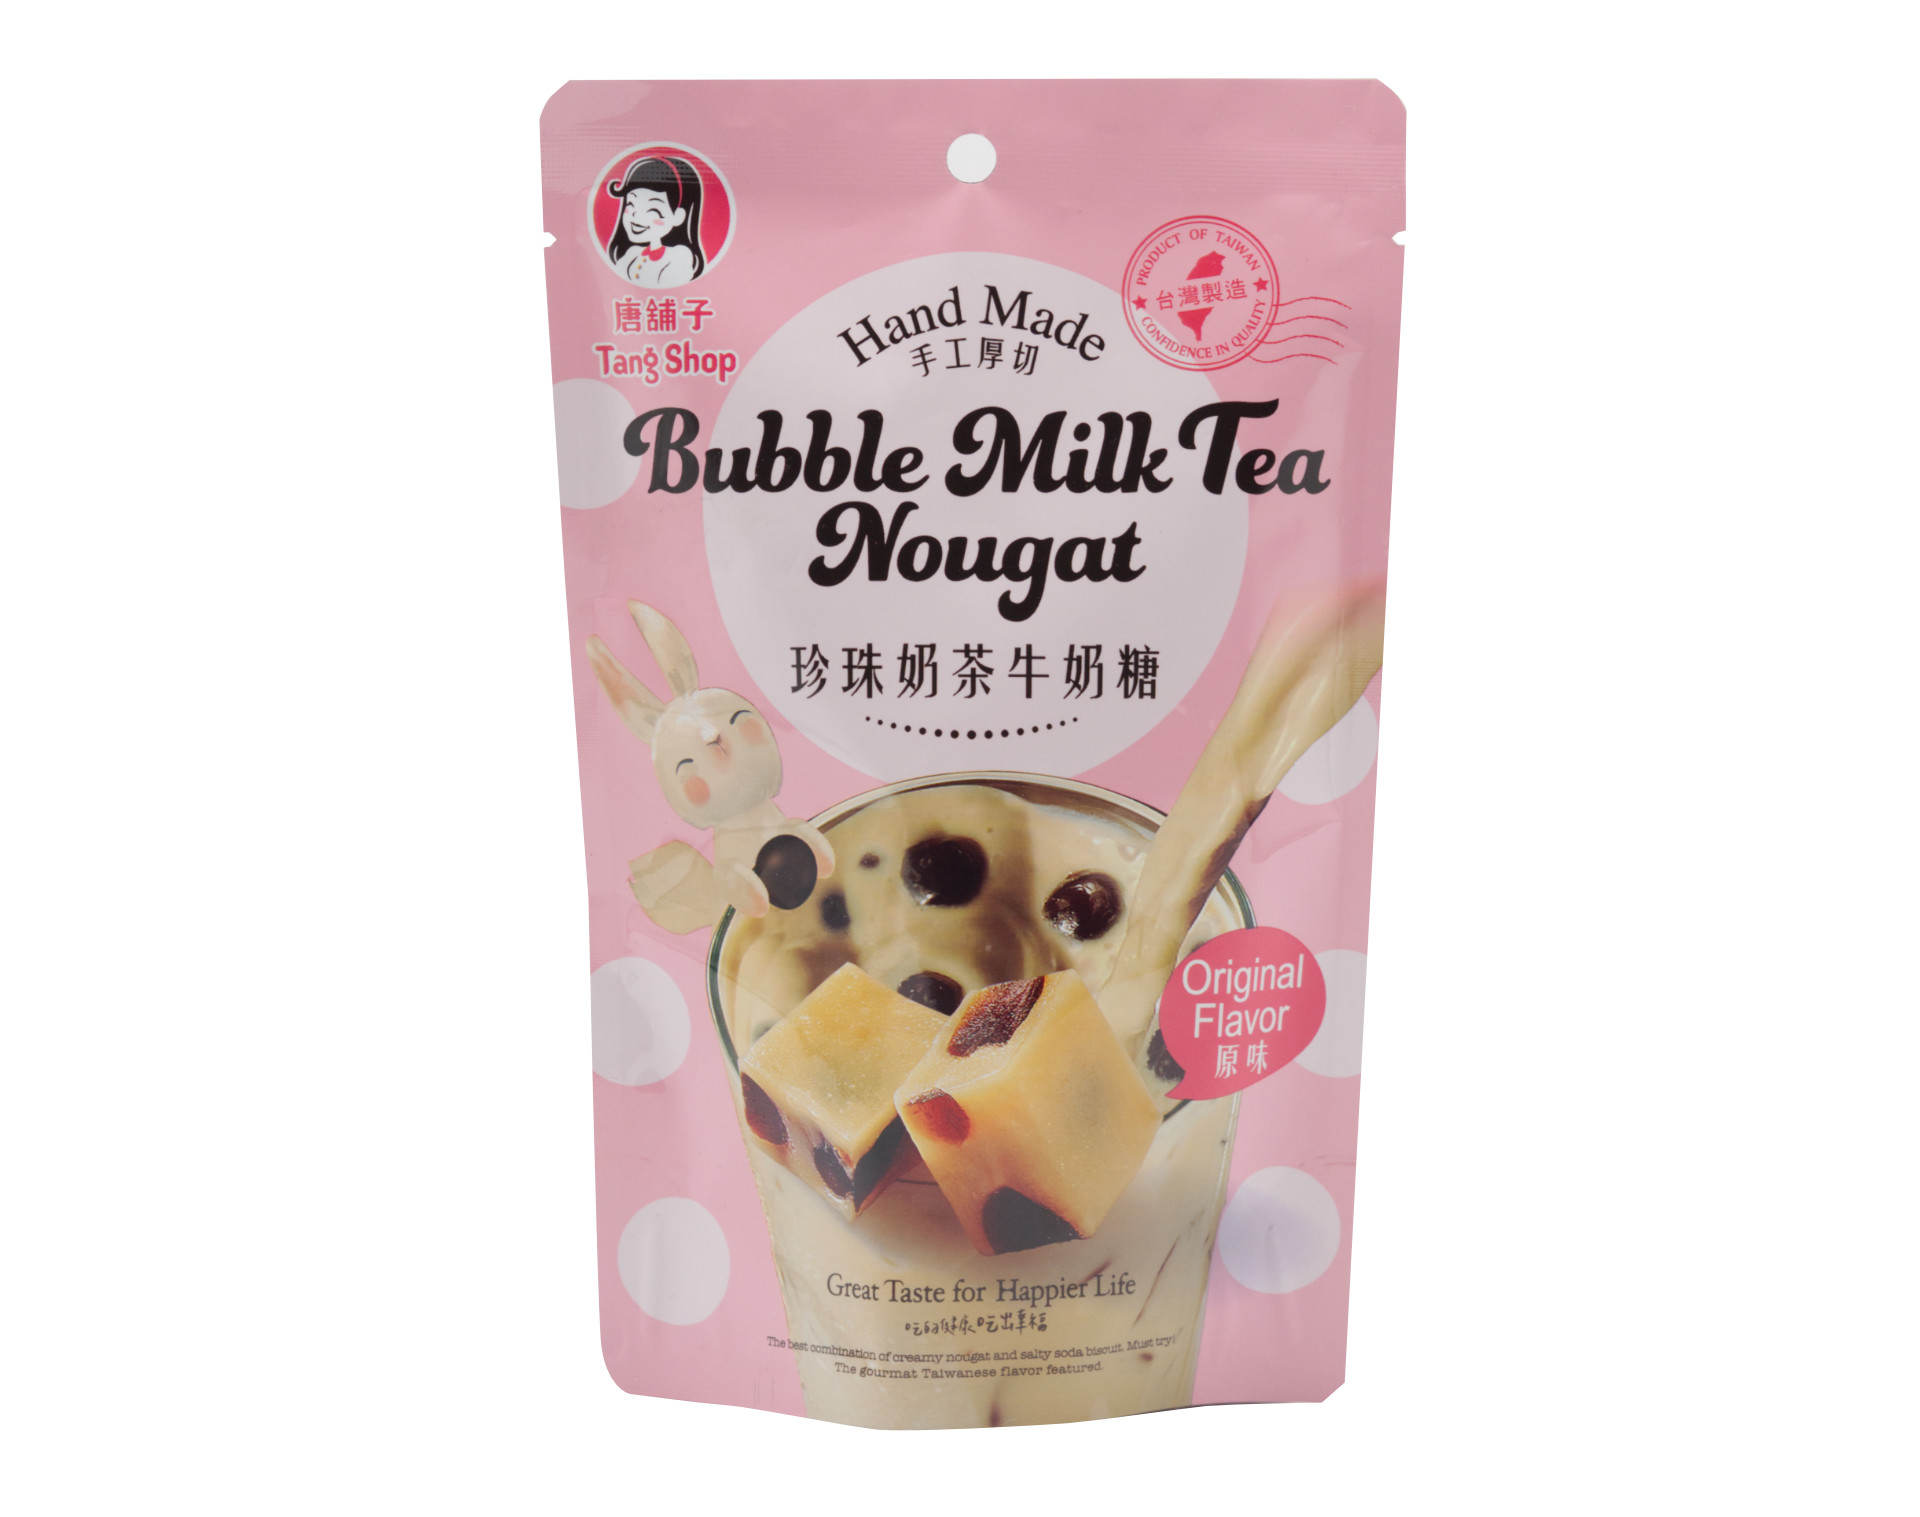 唐舖子 珍珠奶茶 牛奶糖原味 Tang Shop Bubble Milk Tea Nougat – Original Flavor